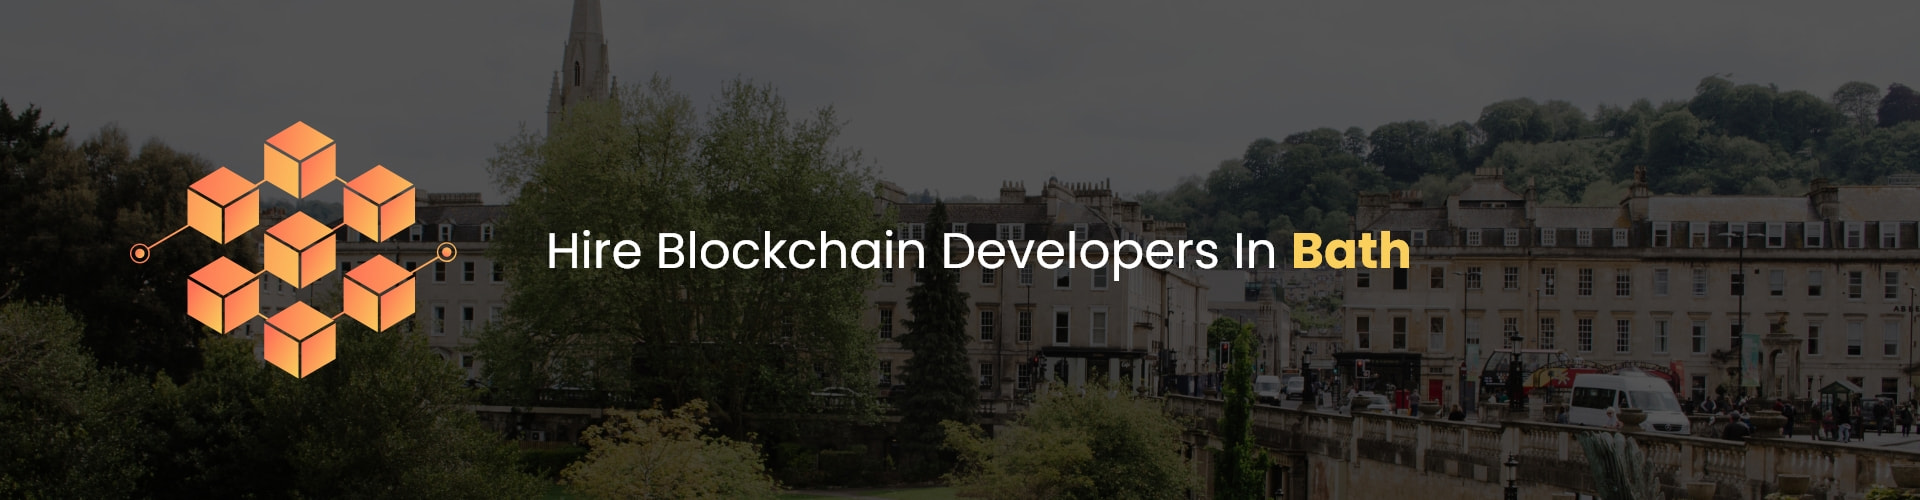 hire blockchain developers in bath